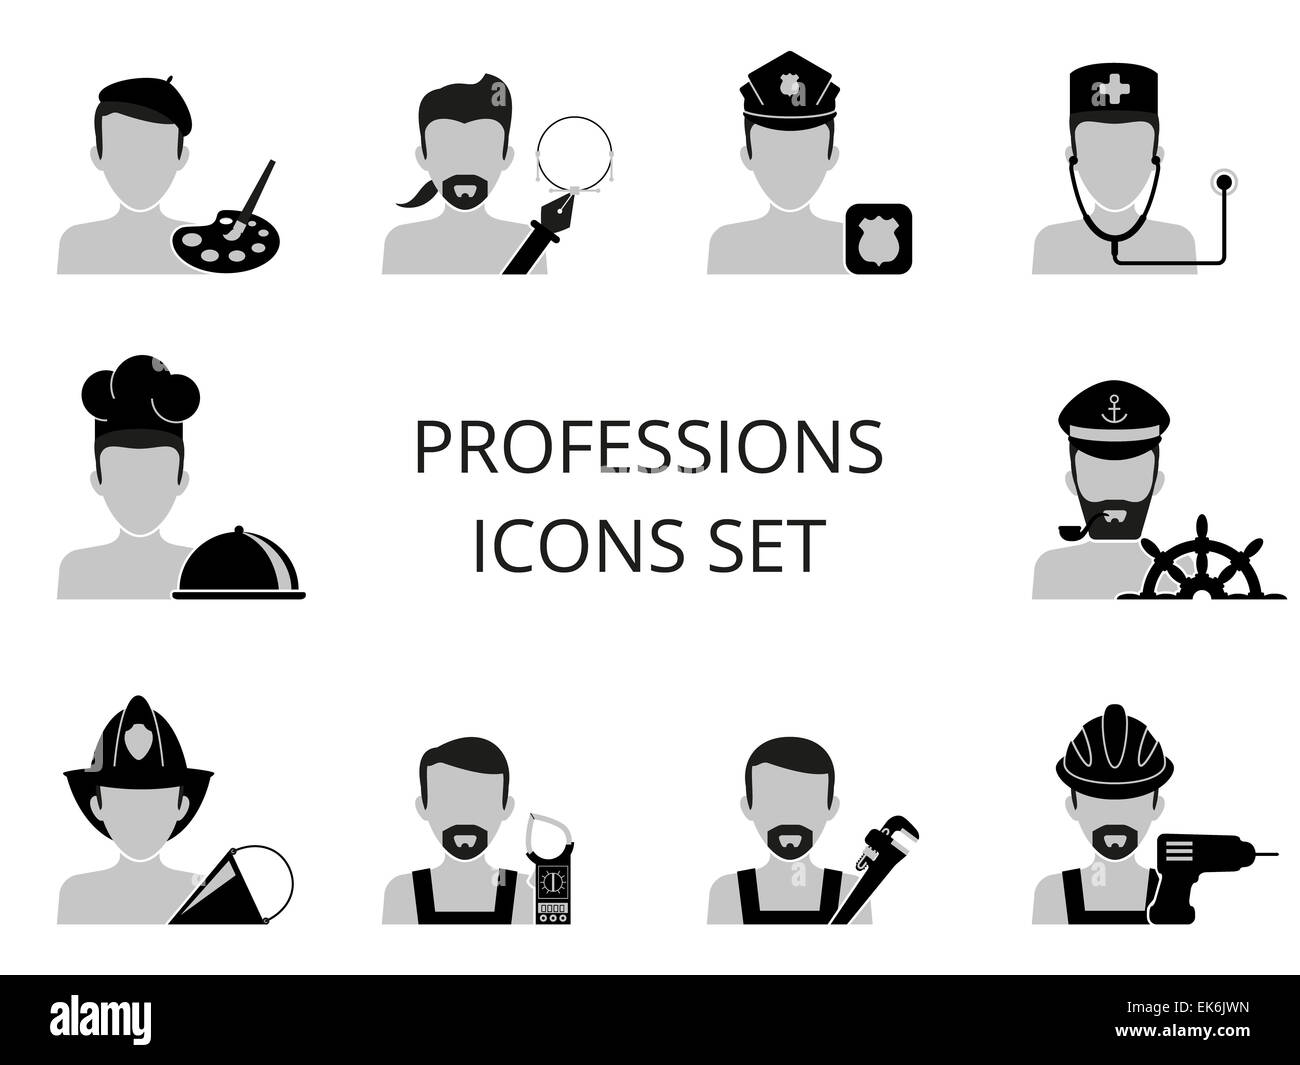 Professions icons set Stock Photo